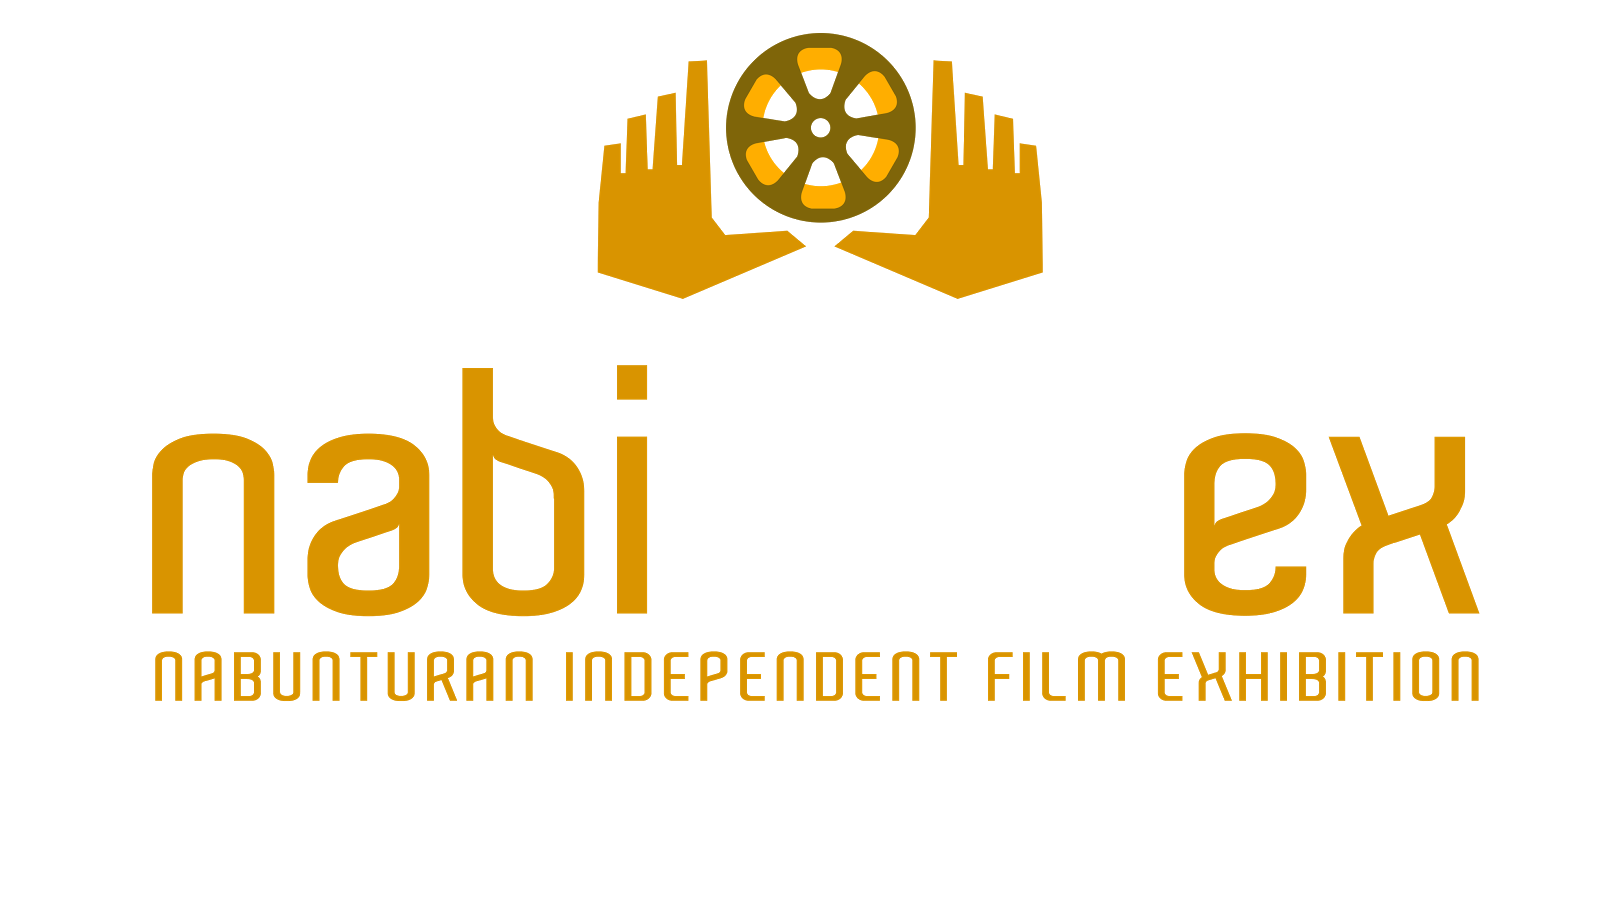 NABIFILMEX: NABUNTURAN INDEPENDENT FILM EXHIBITION